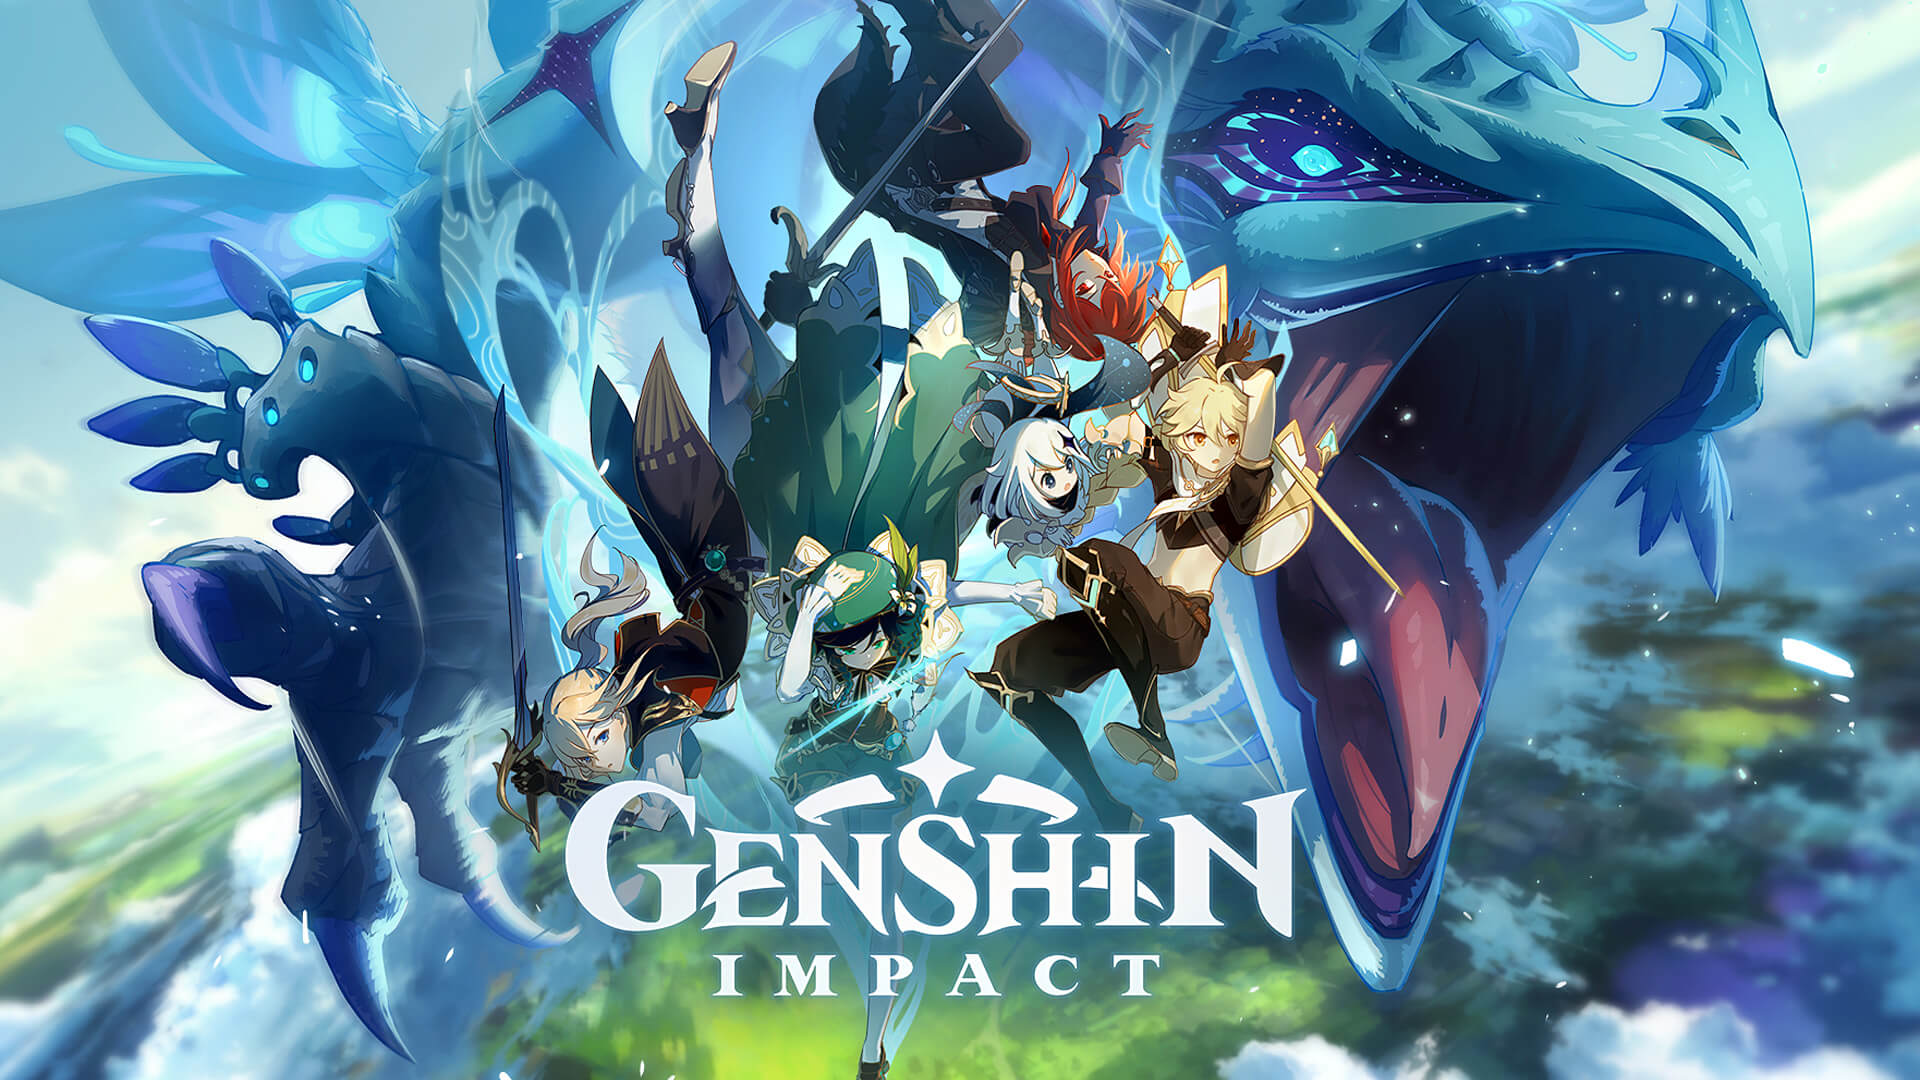 Genshin Impact is an online board game